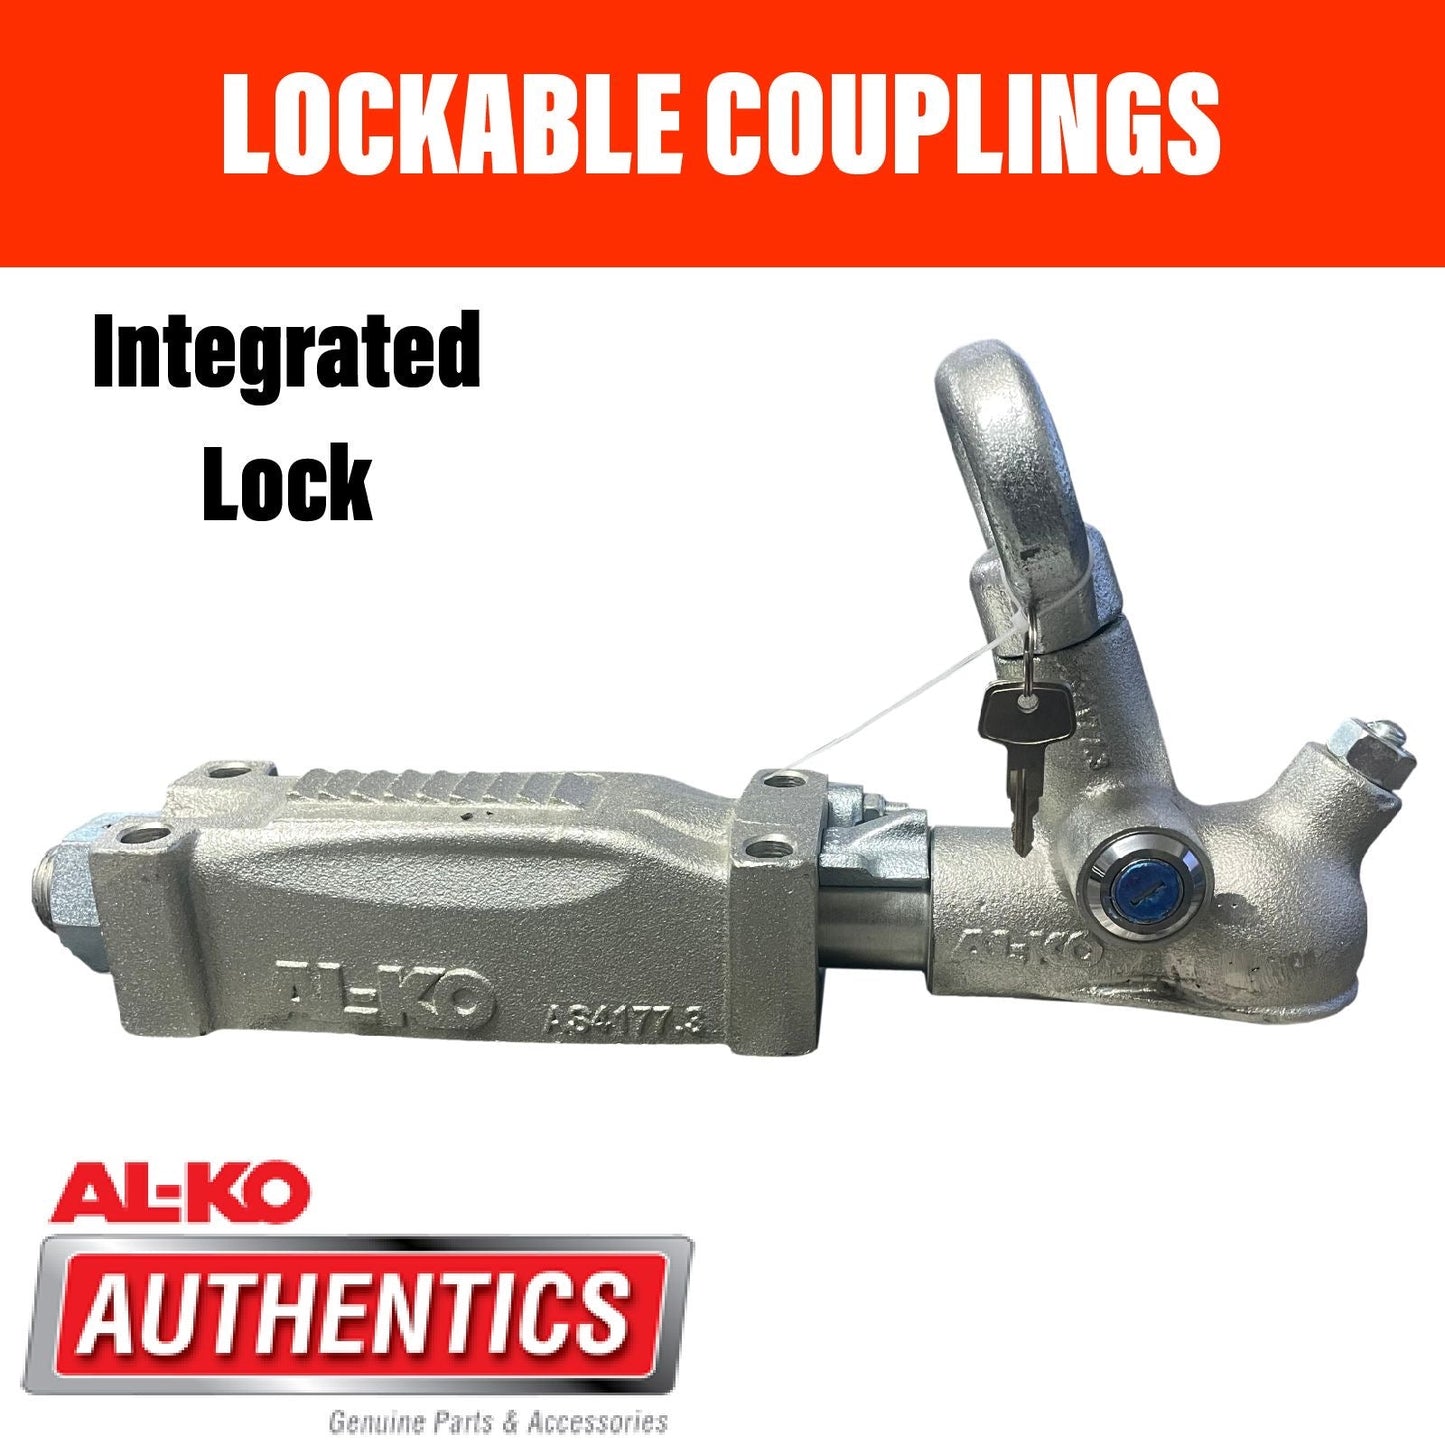 AL-KO 2000KG Braked Lockable Coupling